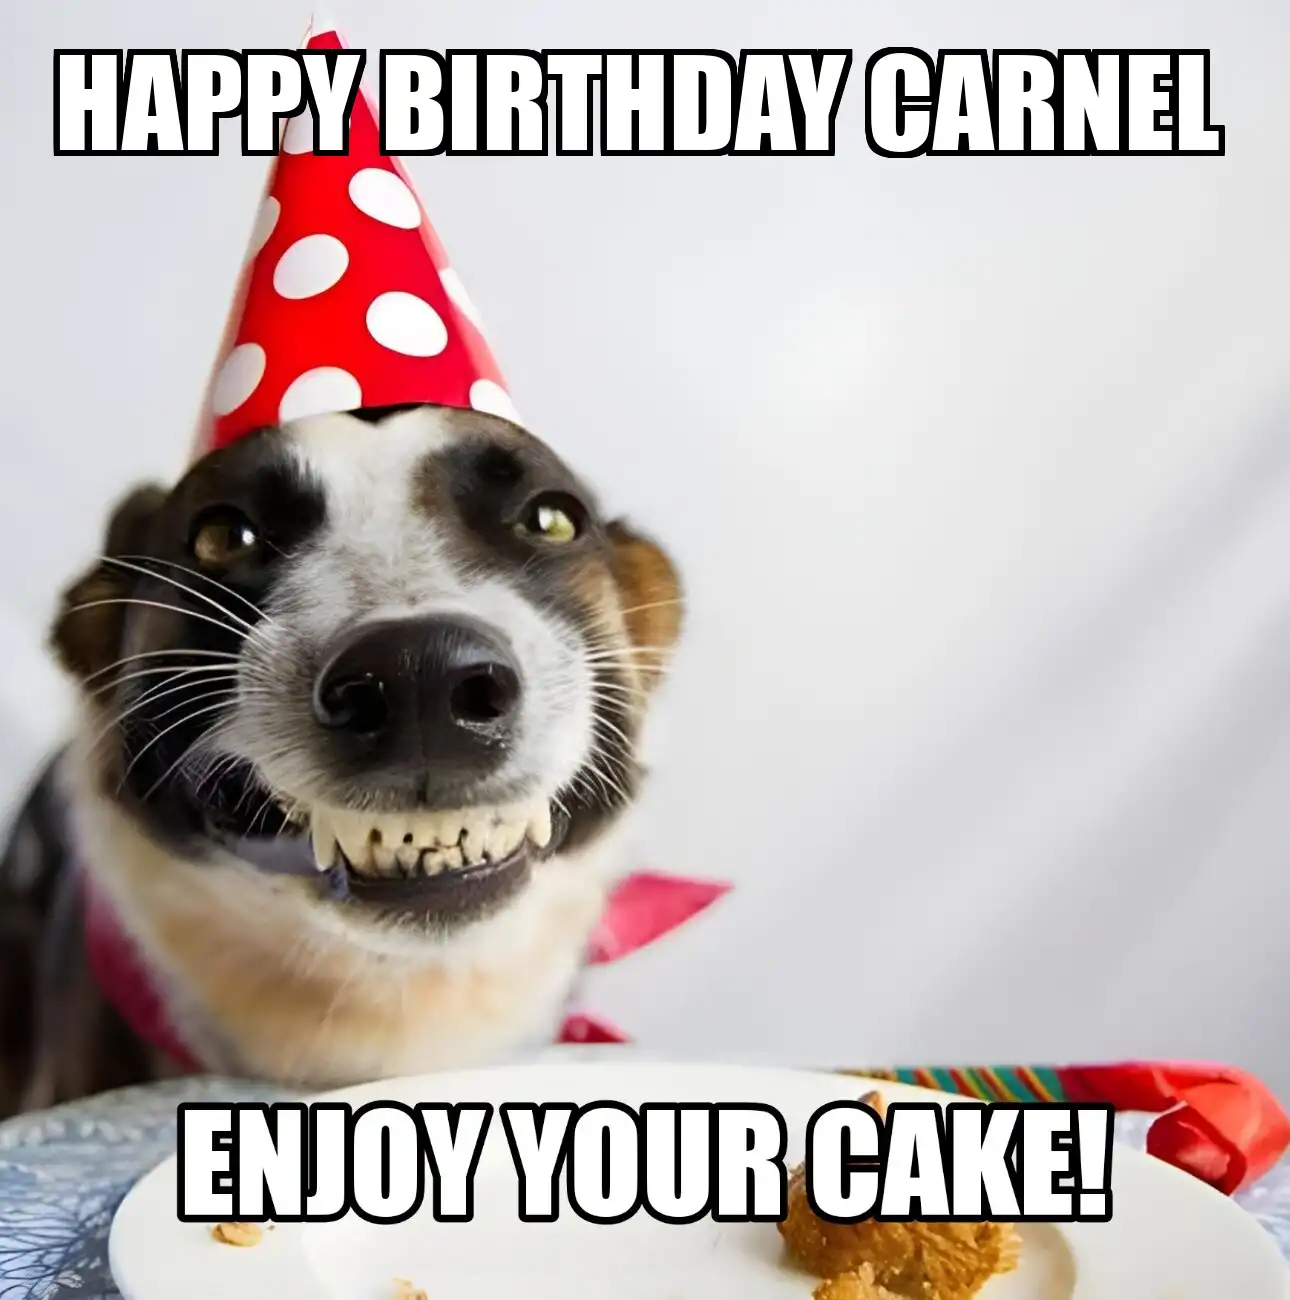 Happy Birthday Carnel Enjoy Your Cake Dog Meme